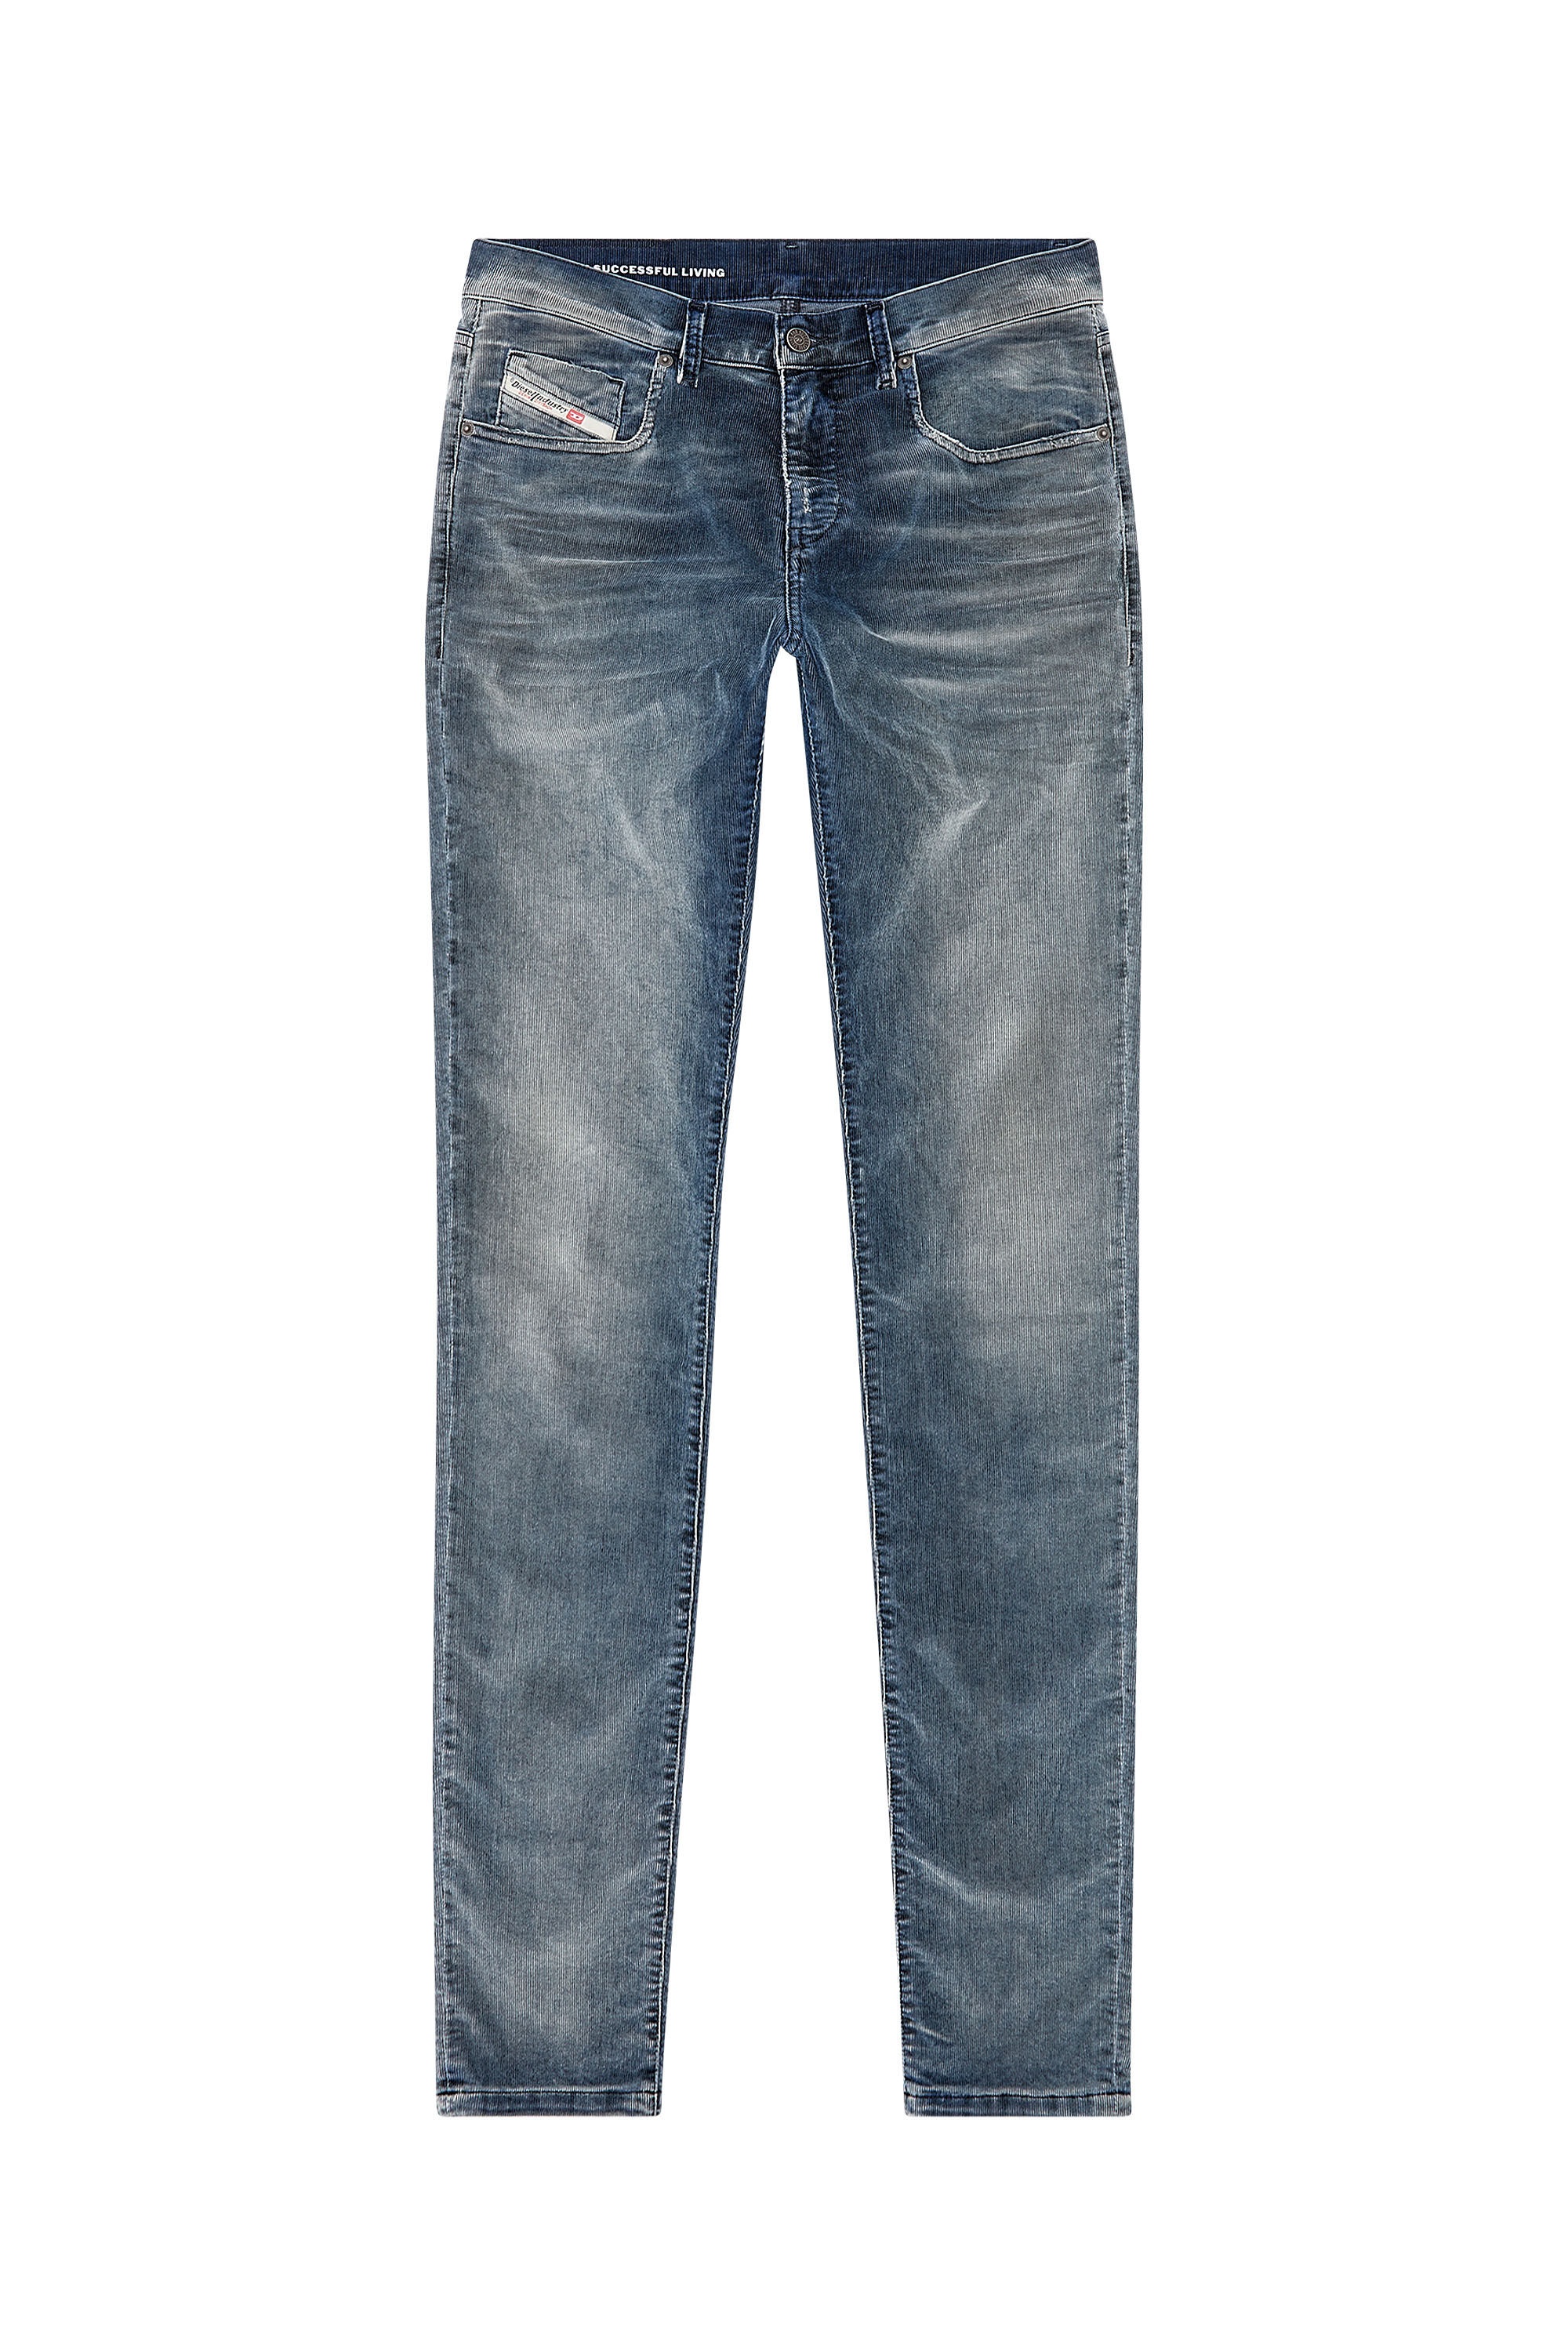 Diesel - Slim Jeans 2019 D-Strukt 068JF, Hombre Slim Jeans - 2019 D-Strukt in Azul marino - Image 2